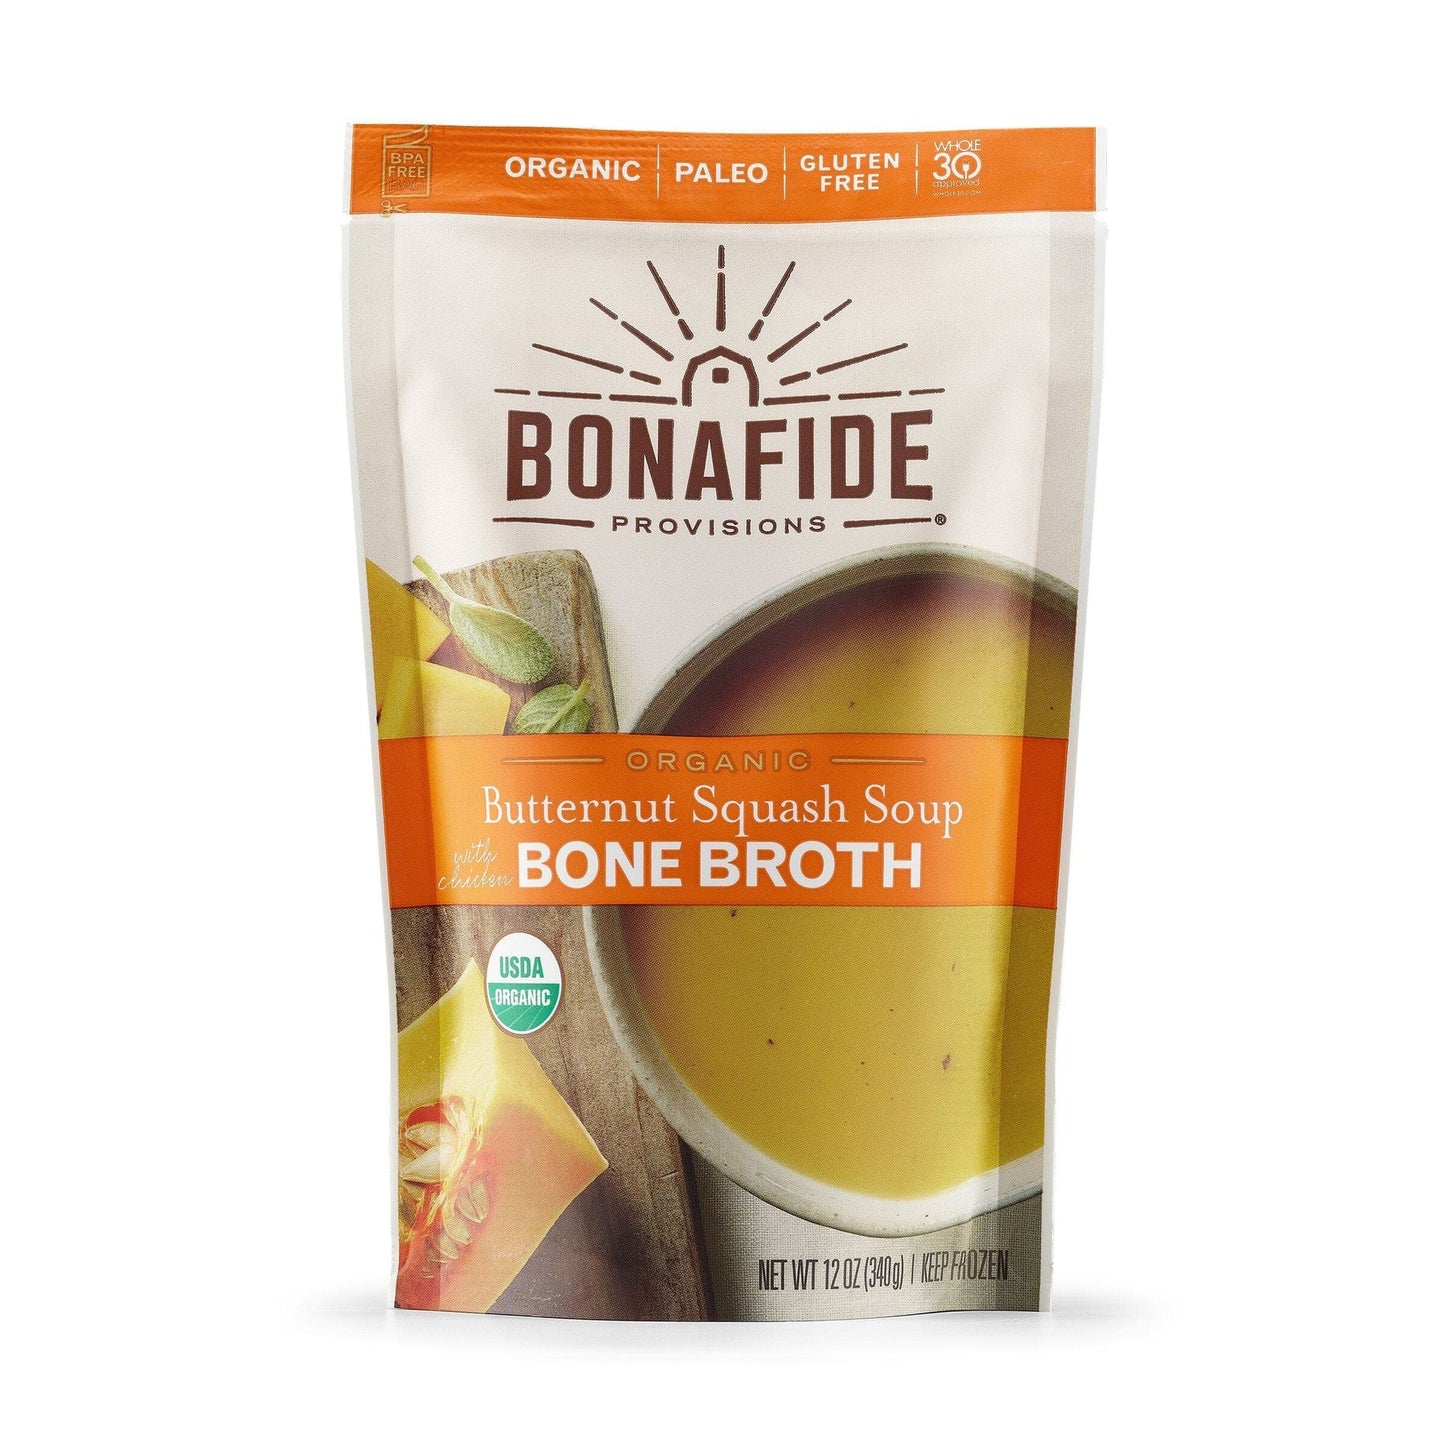 Bonafide Provisions Frozen Organic Butternut Squash Soup - 12 oz